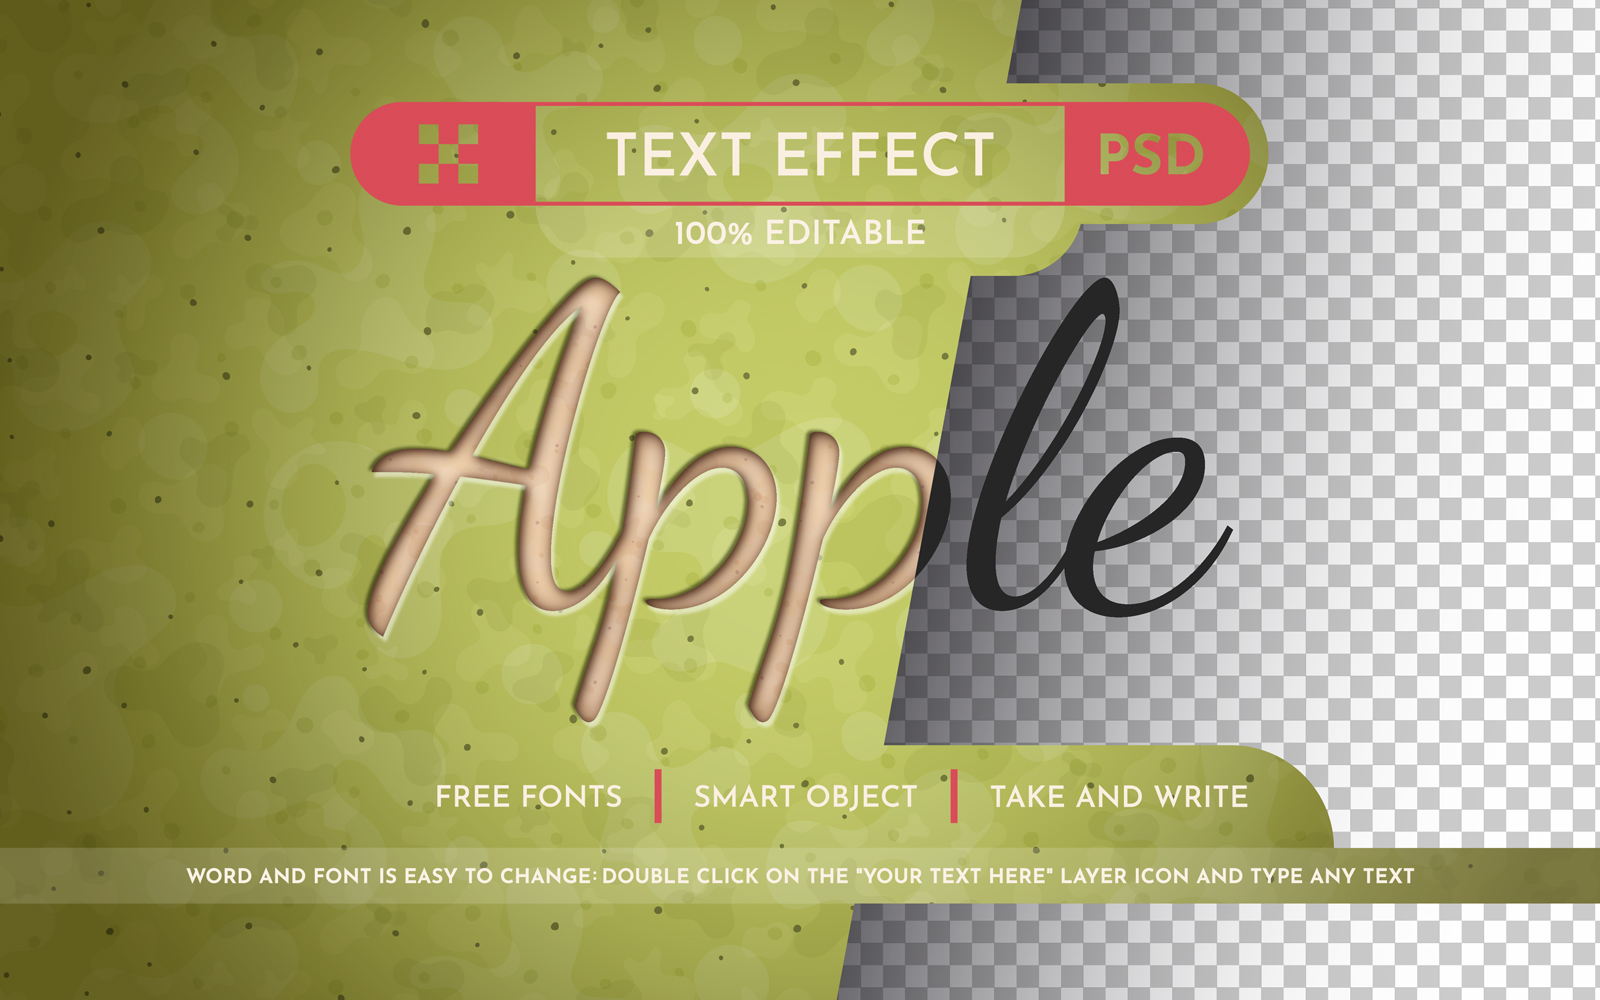 Template #371688 Text Effect Webdesign Template - Logo template Preview